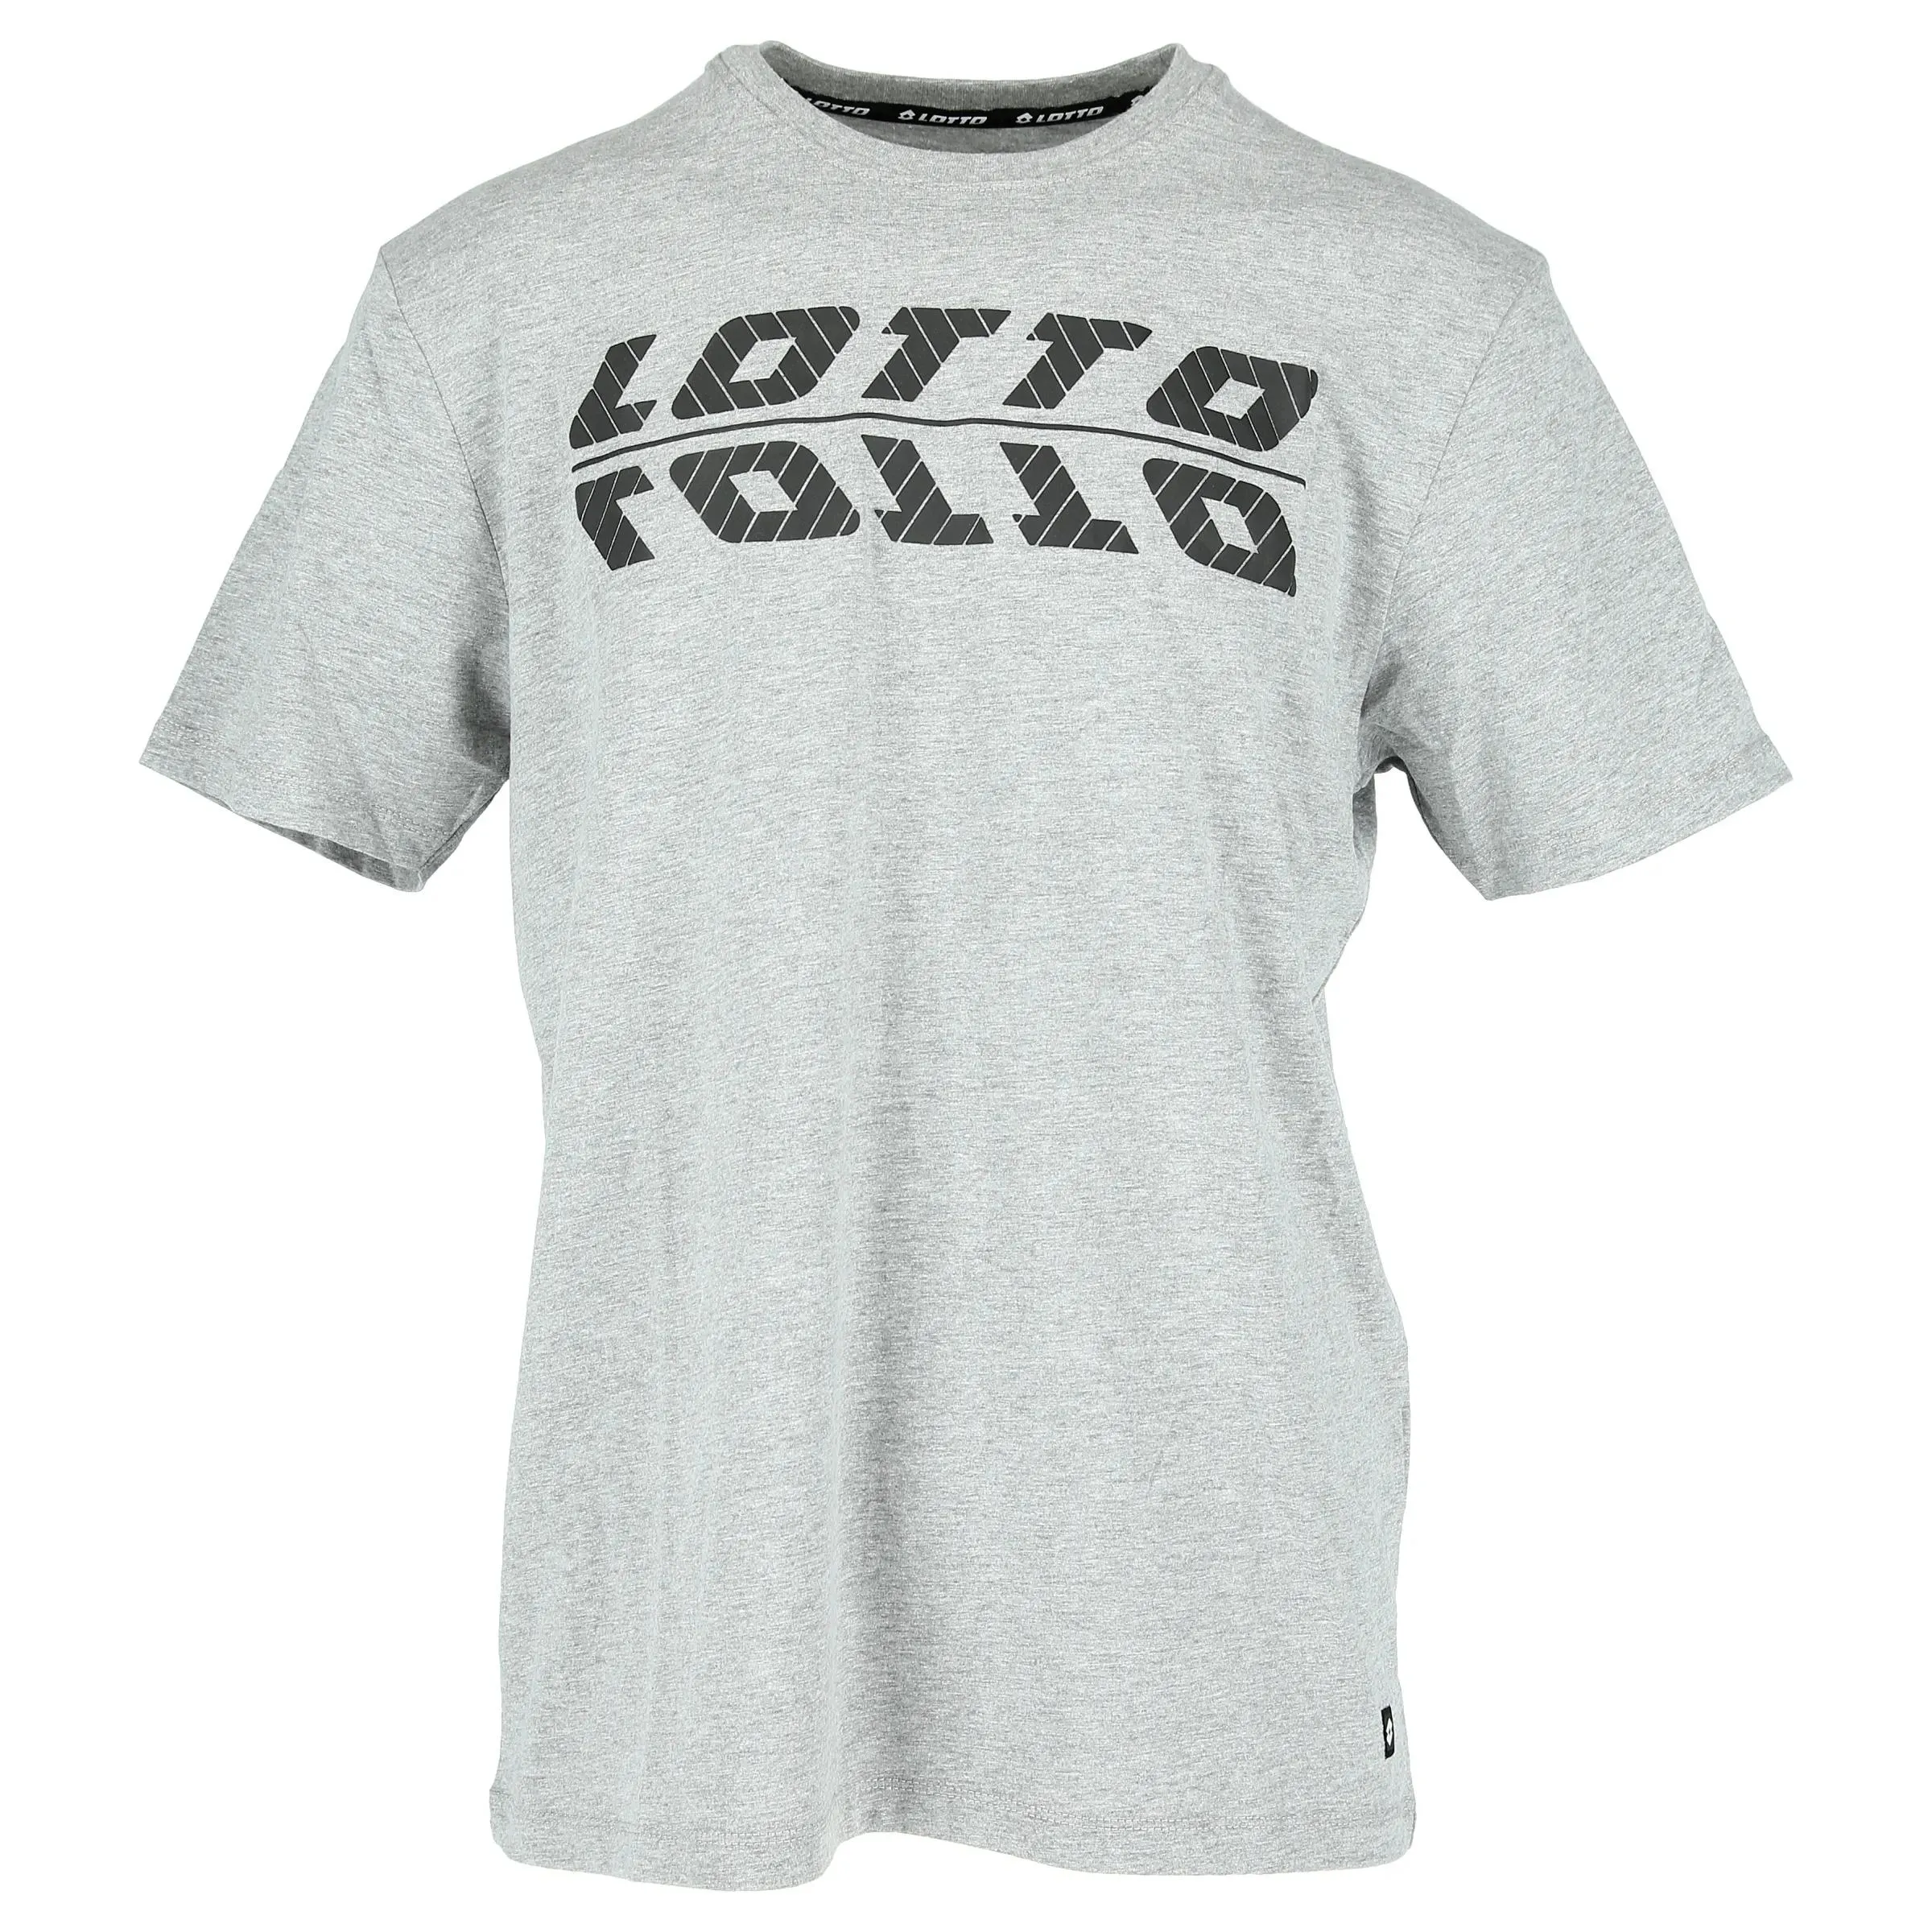 Lotto T-shirt LUIGI T-SHIRT 